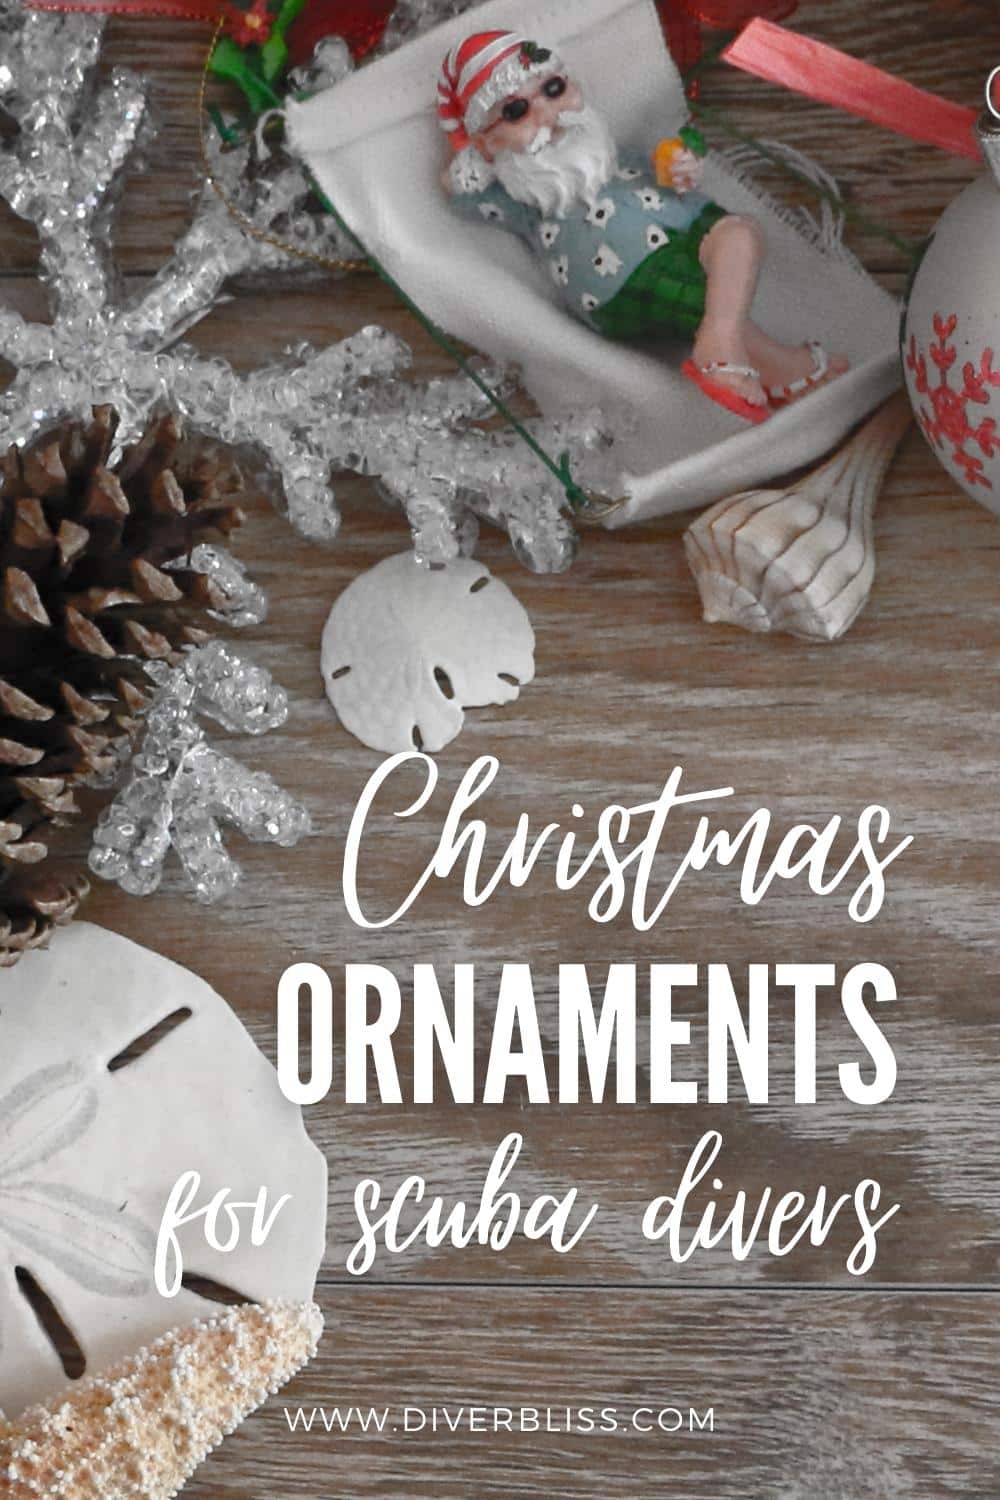 Christmas ornaments for scuba divers